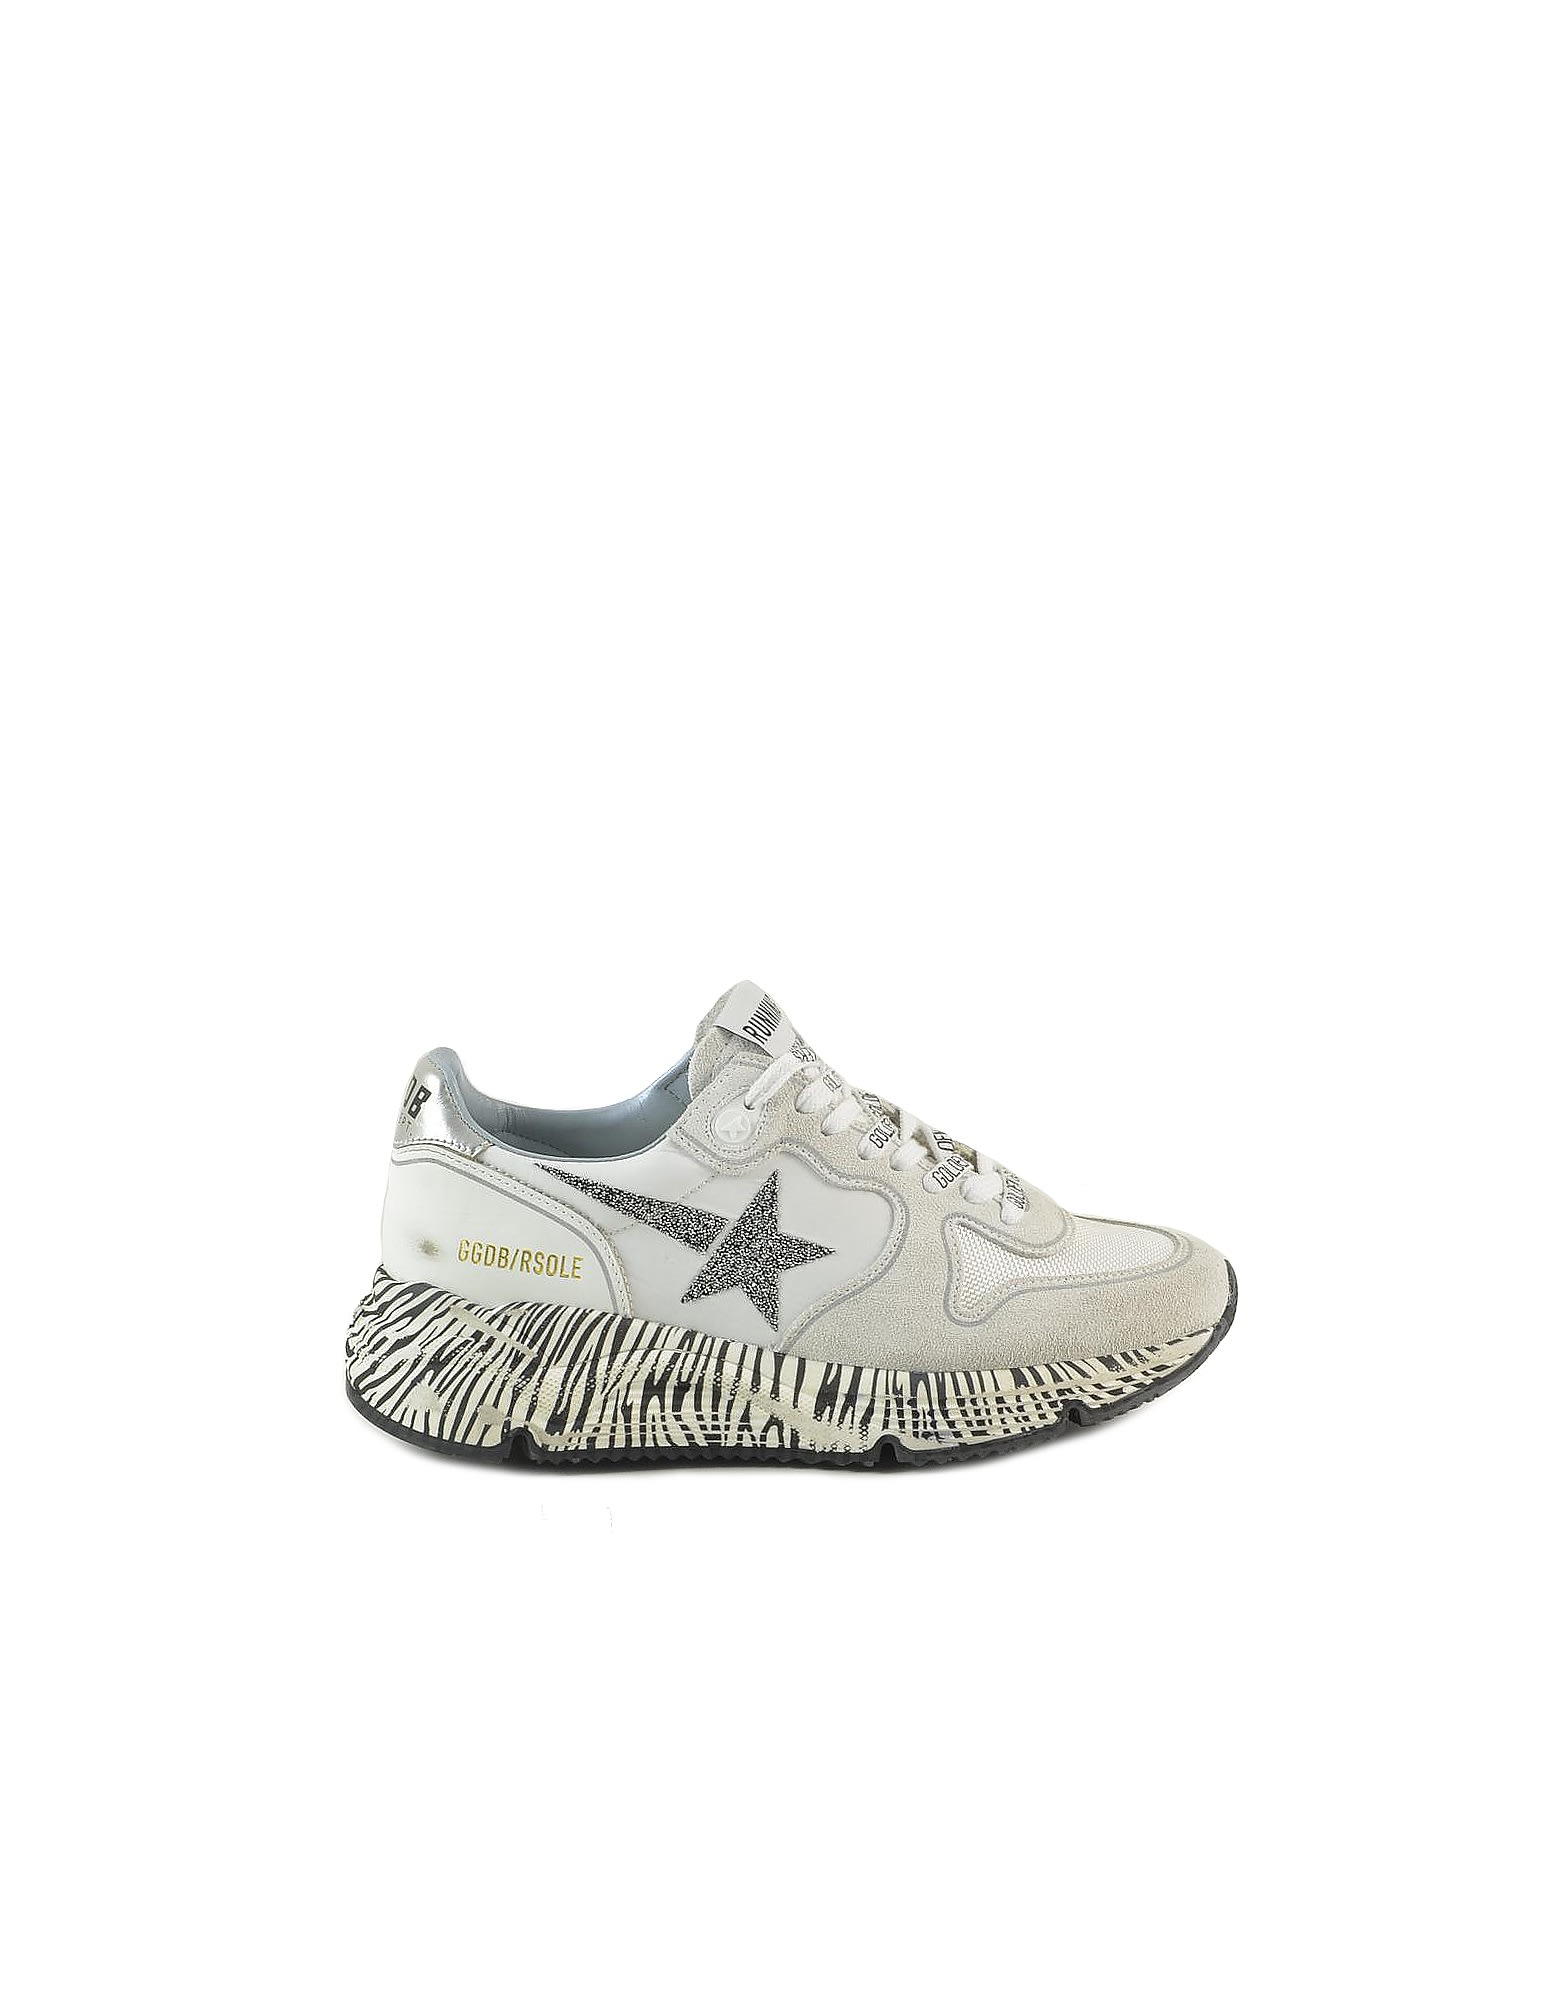 Golden Goose White/black Zebra Print Rubber Sole Sneakers W/stars